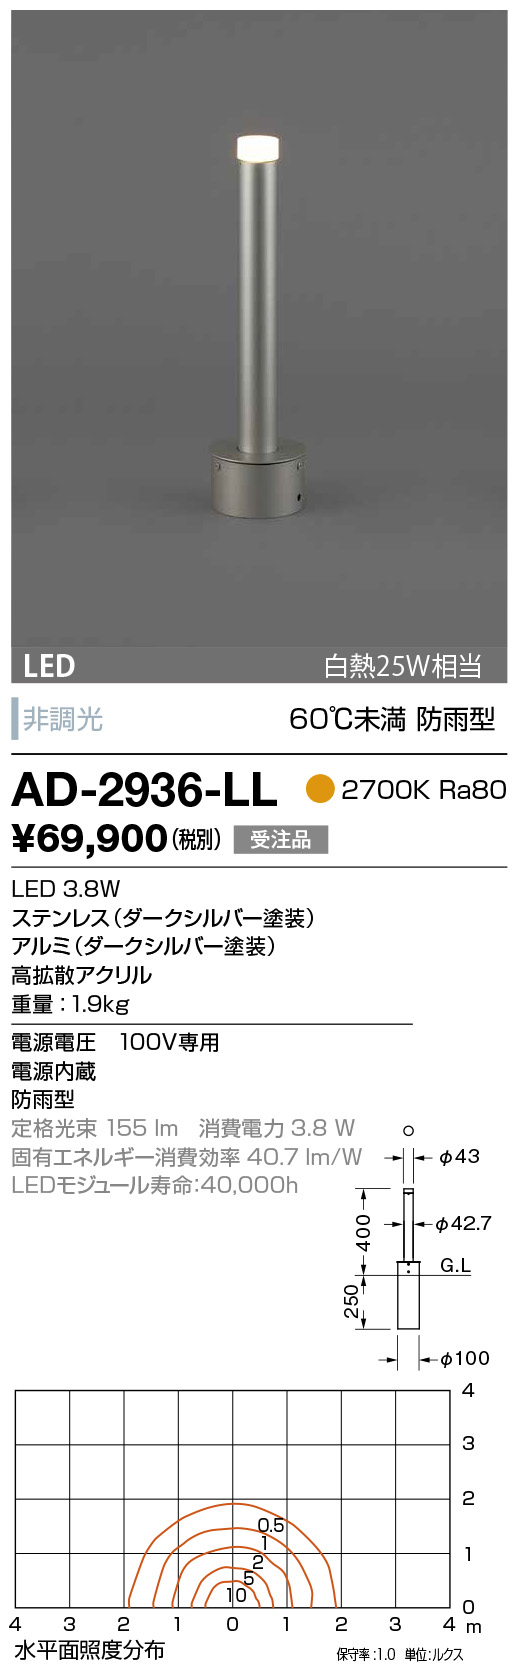 AD-2936-LL(山田照明) 商品詳細 ～ 照明器具・換気扇他、電設資材販売のブライト